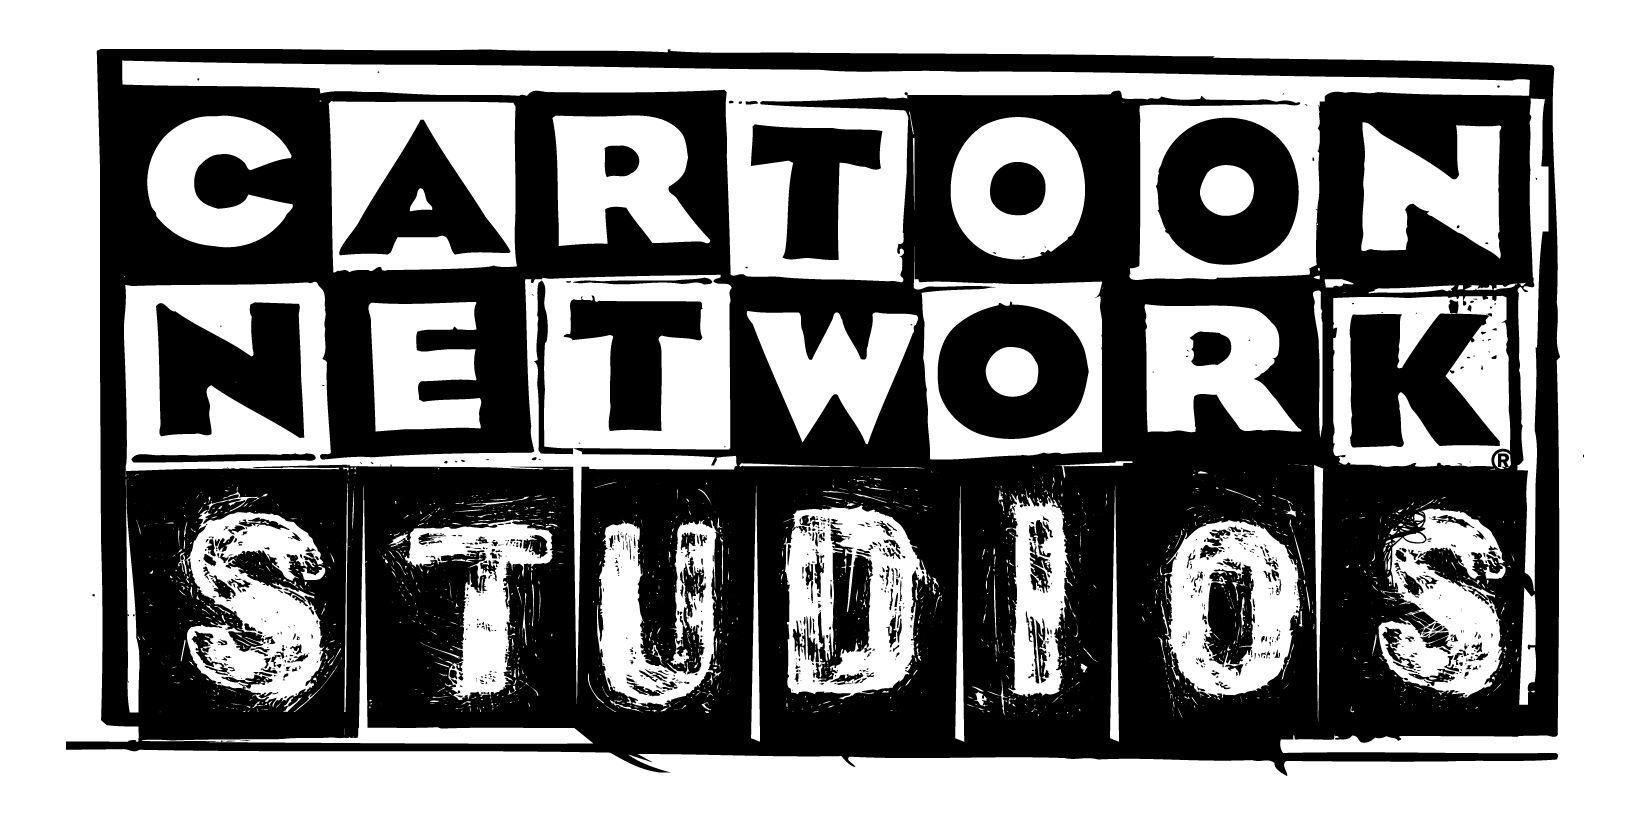 Cartoon Network Studios Logo - Cartoon Network Studios | The Cartoon Network Wiki | FANDOM powered ...